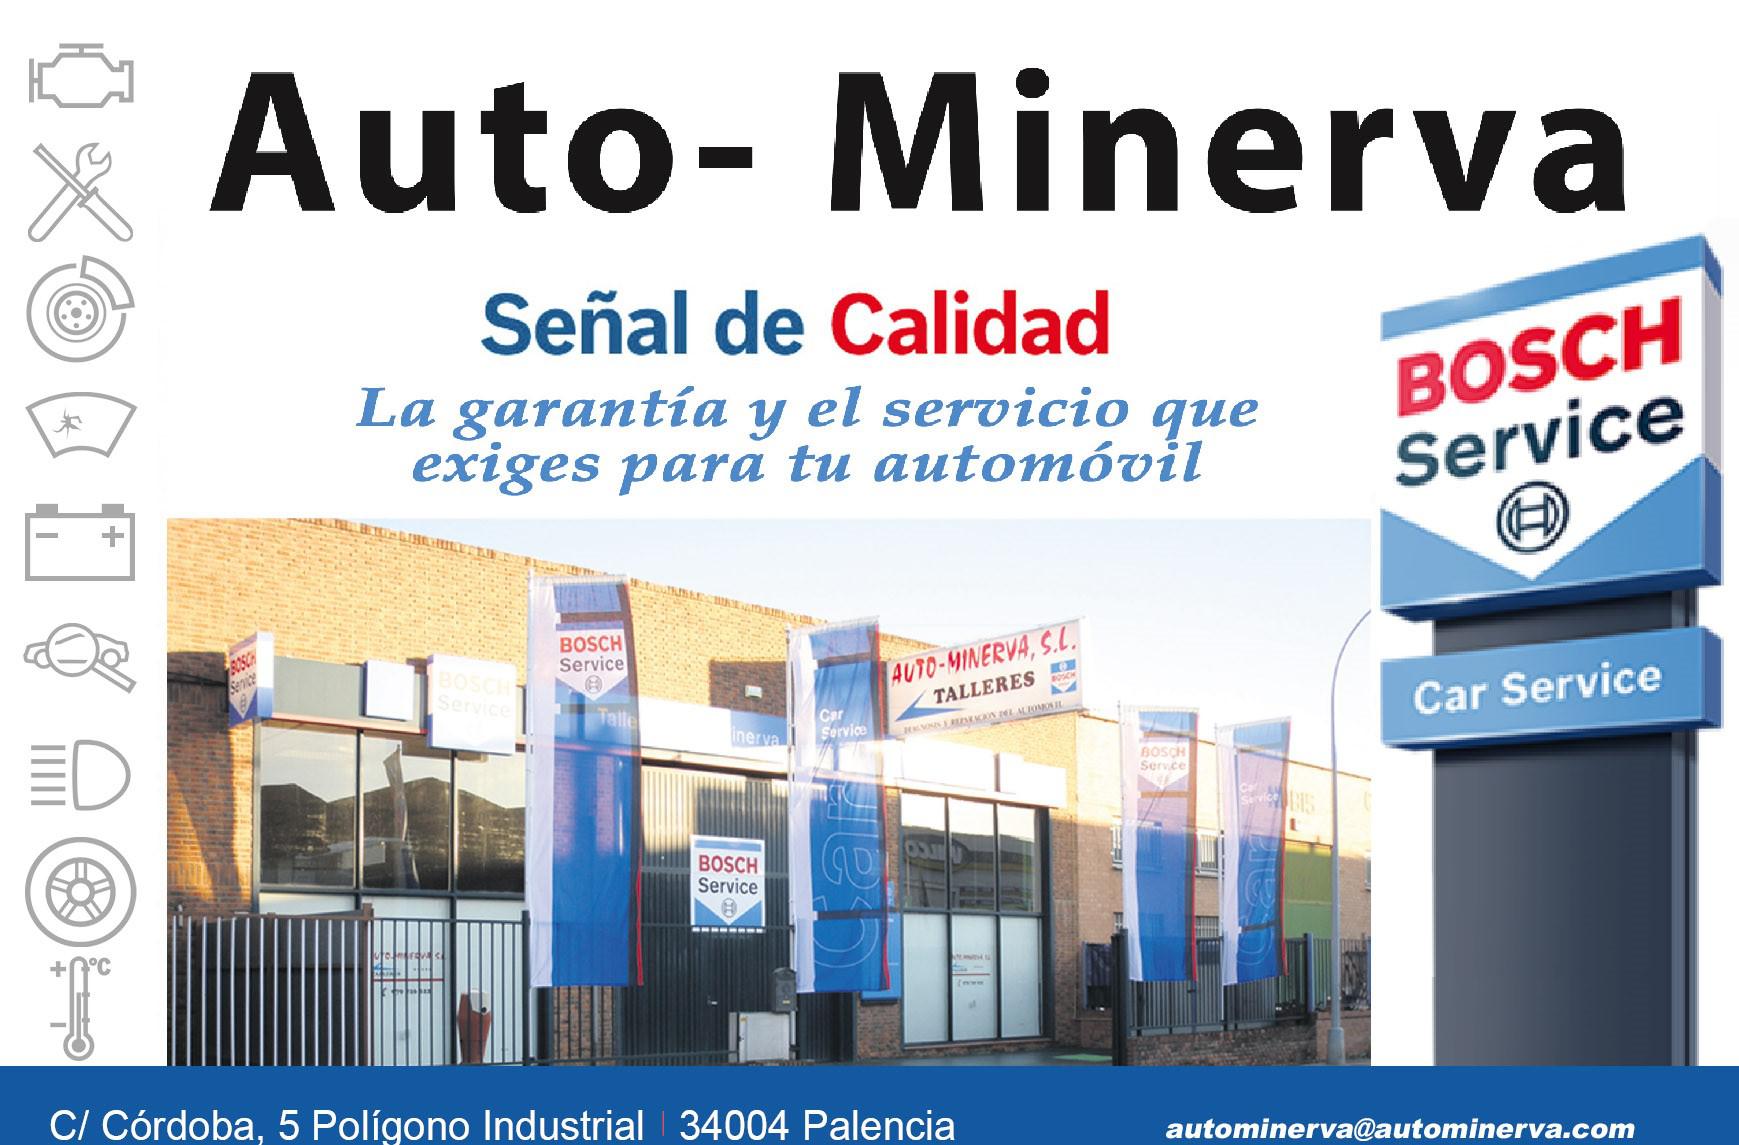 Images Taller mecánico Auto Minerva Bosch Car Service